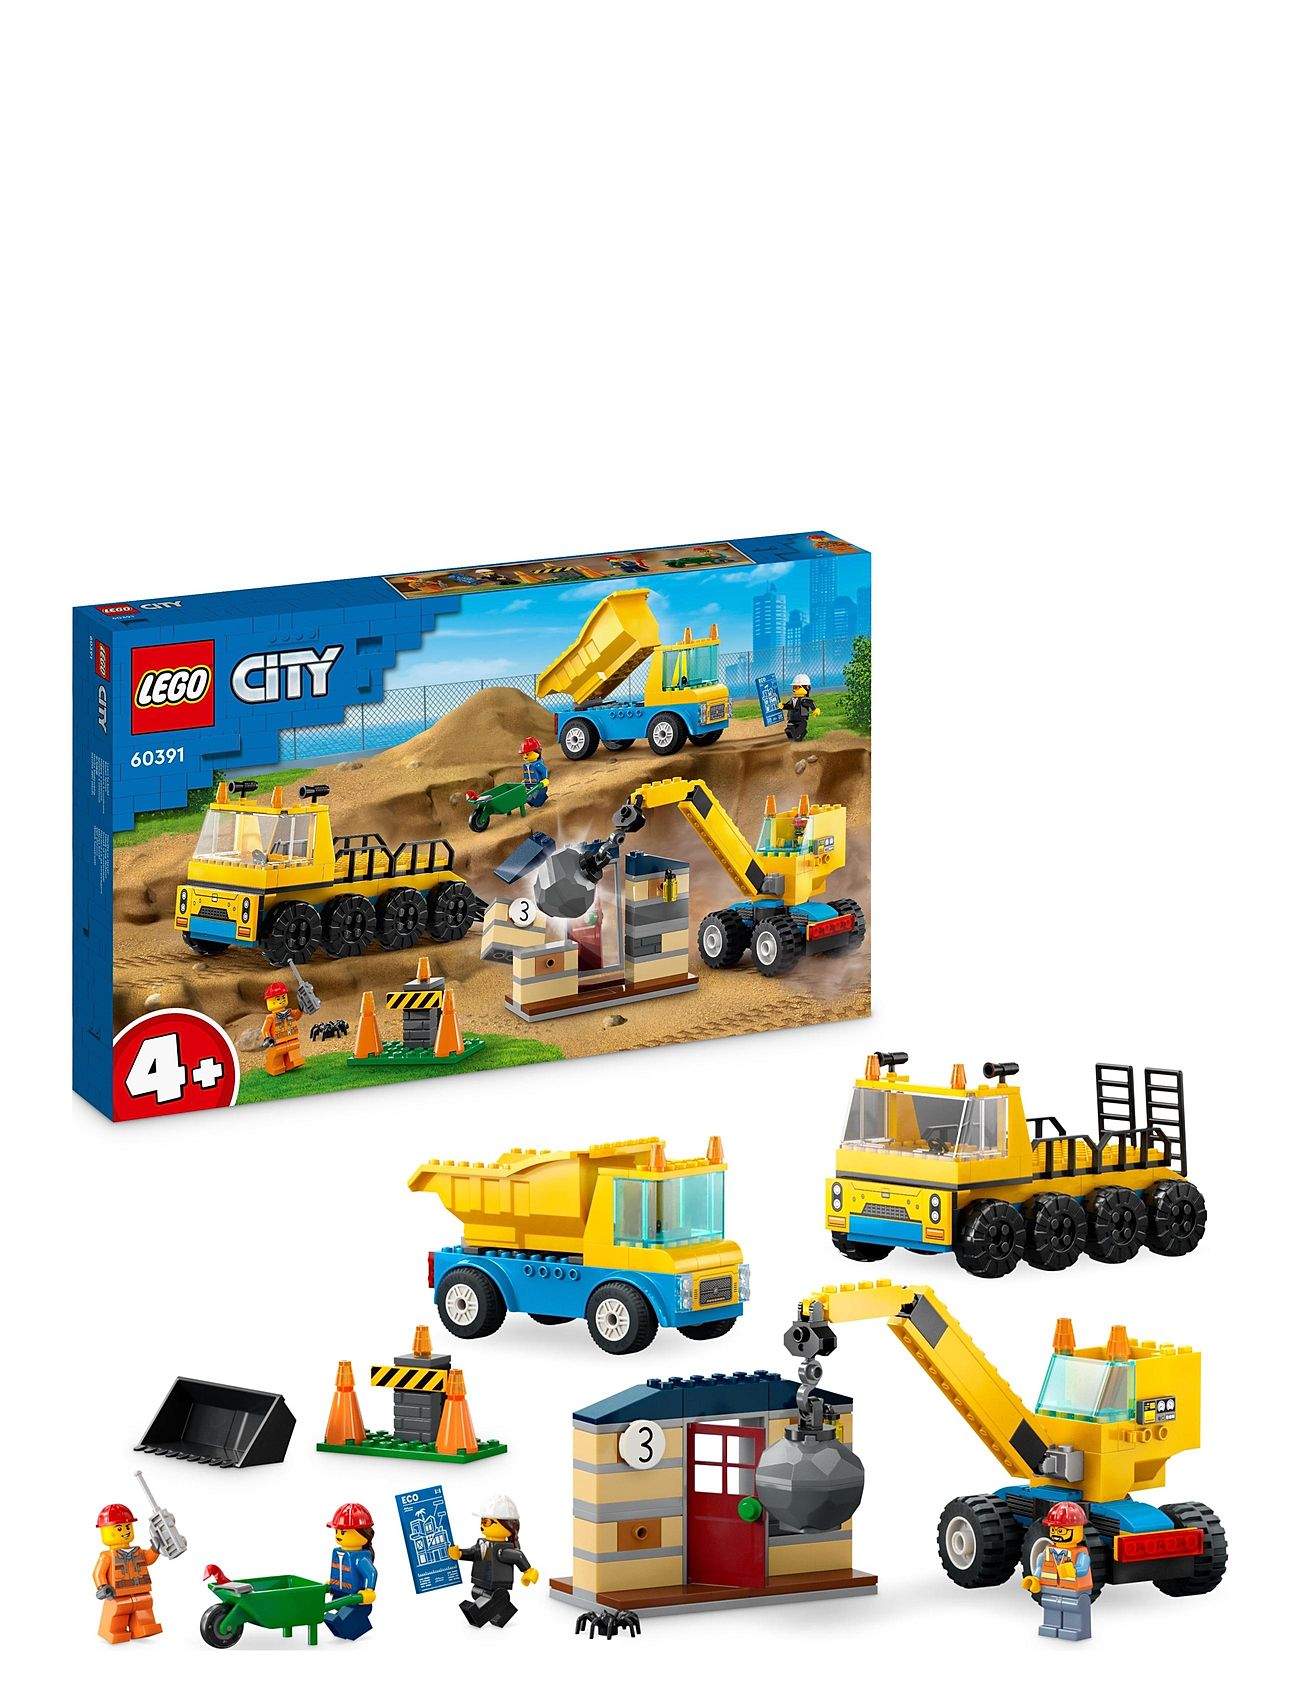 Construction Trucks & Wrecking Ball Crane Toys